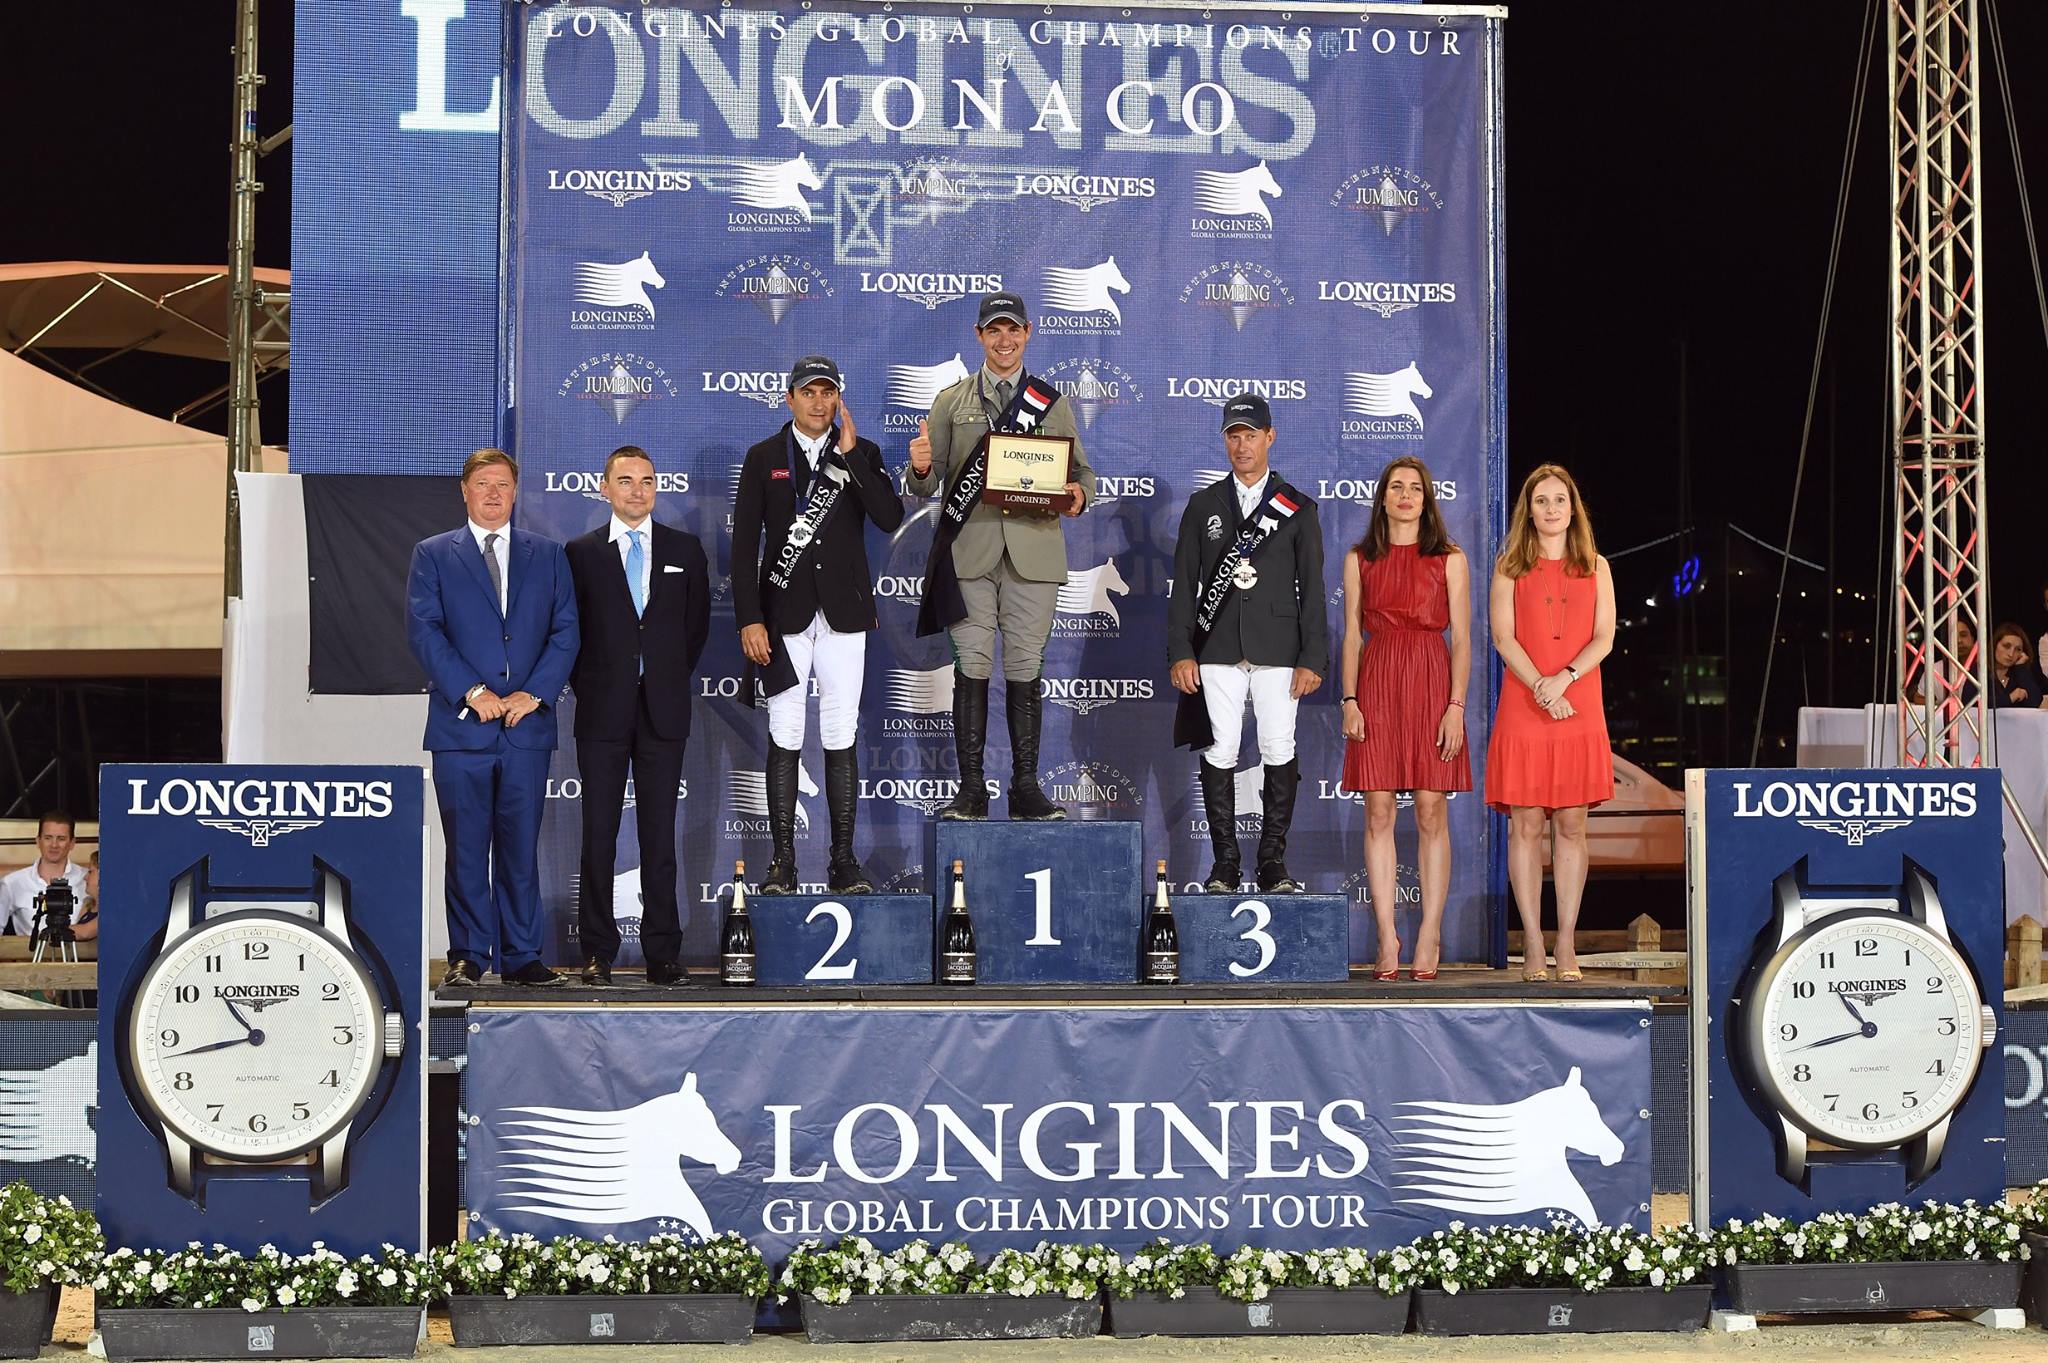 longines global champions tour merch